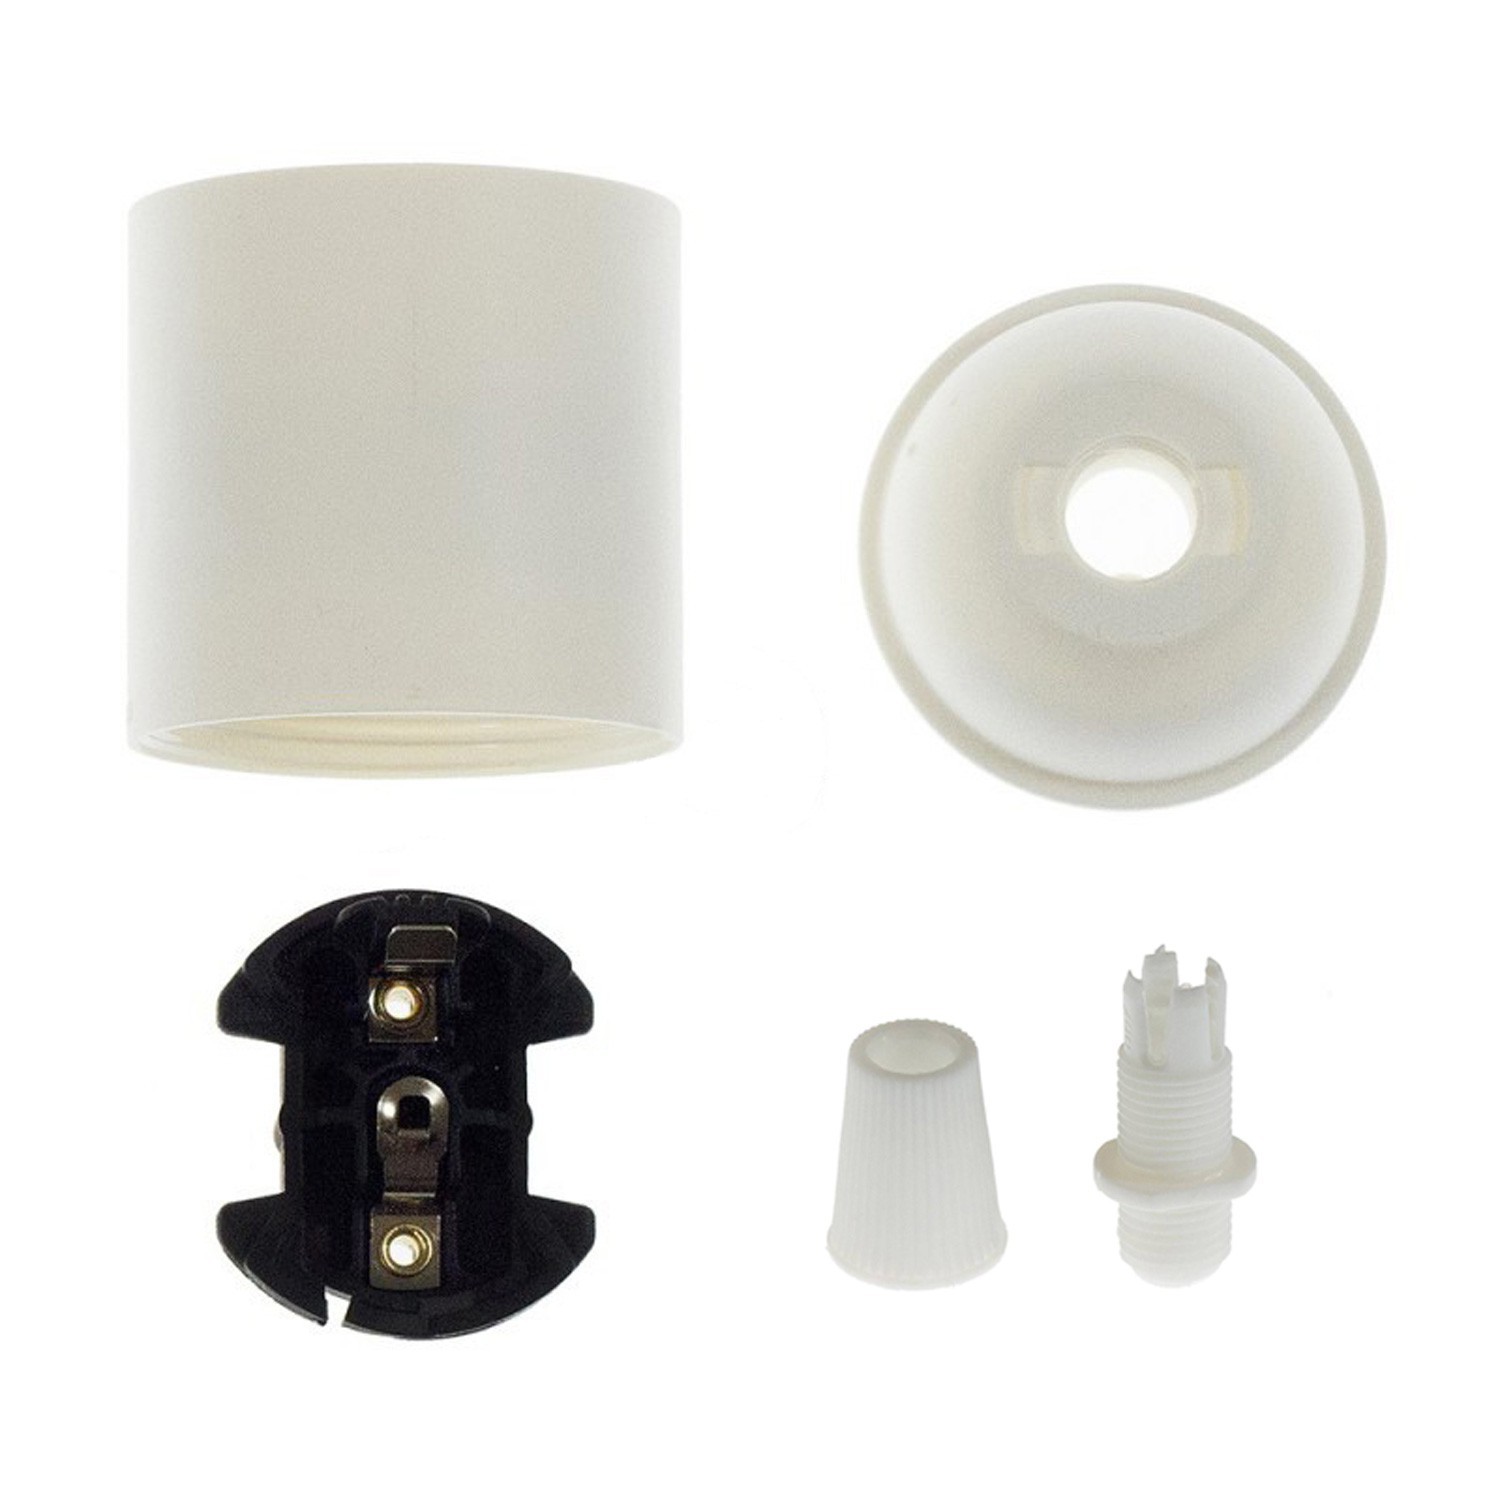 Thermoplastic E27 lamp holder kit